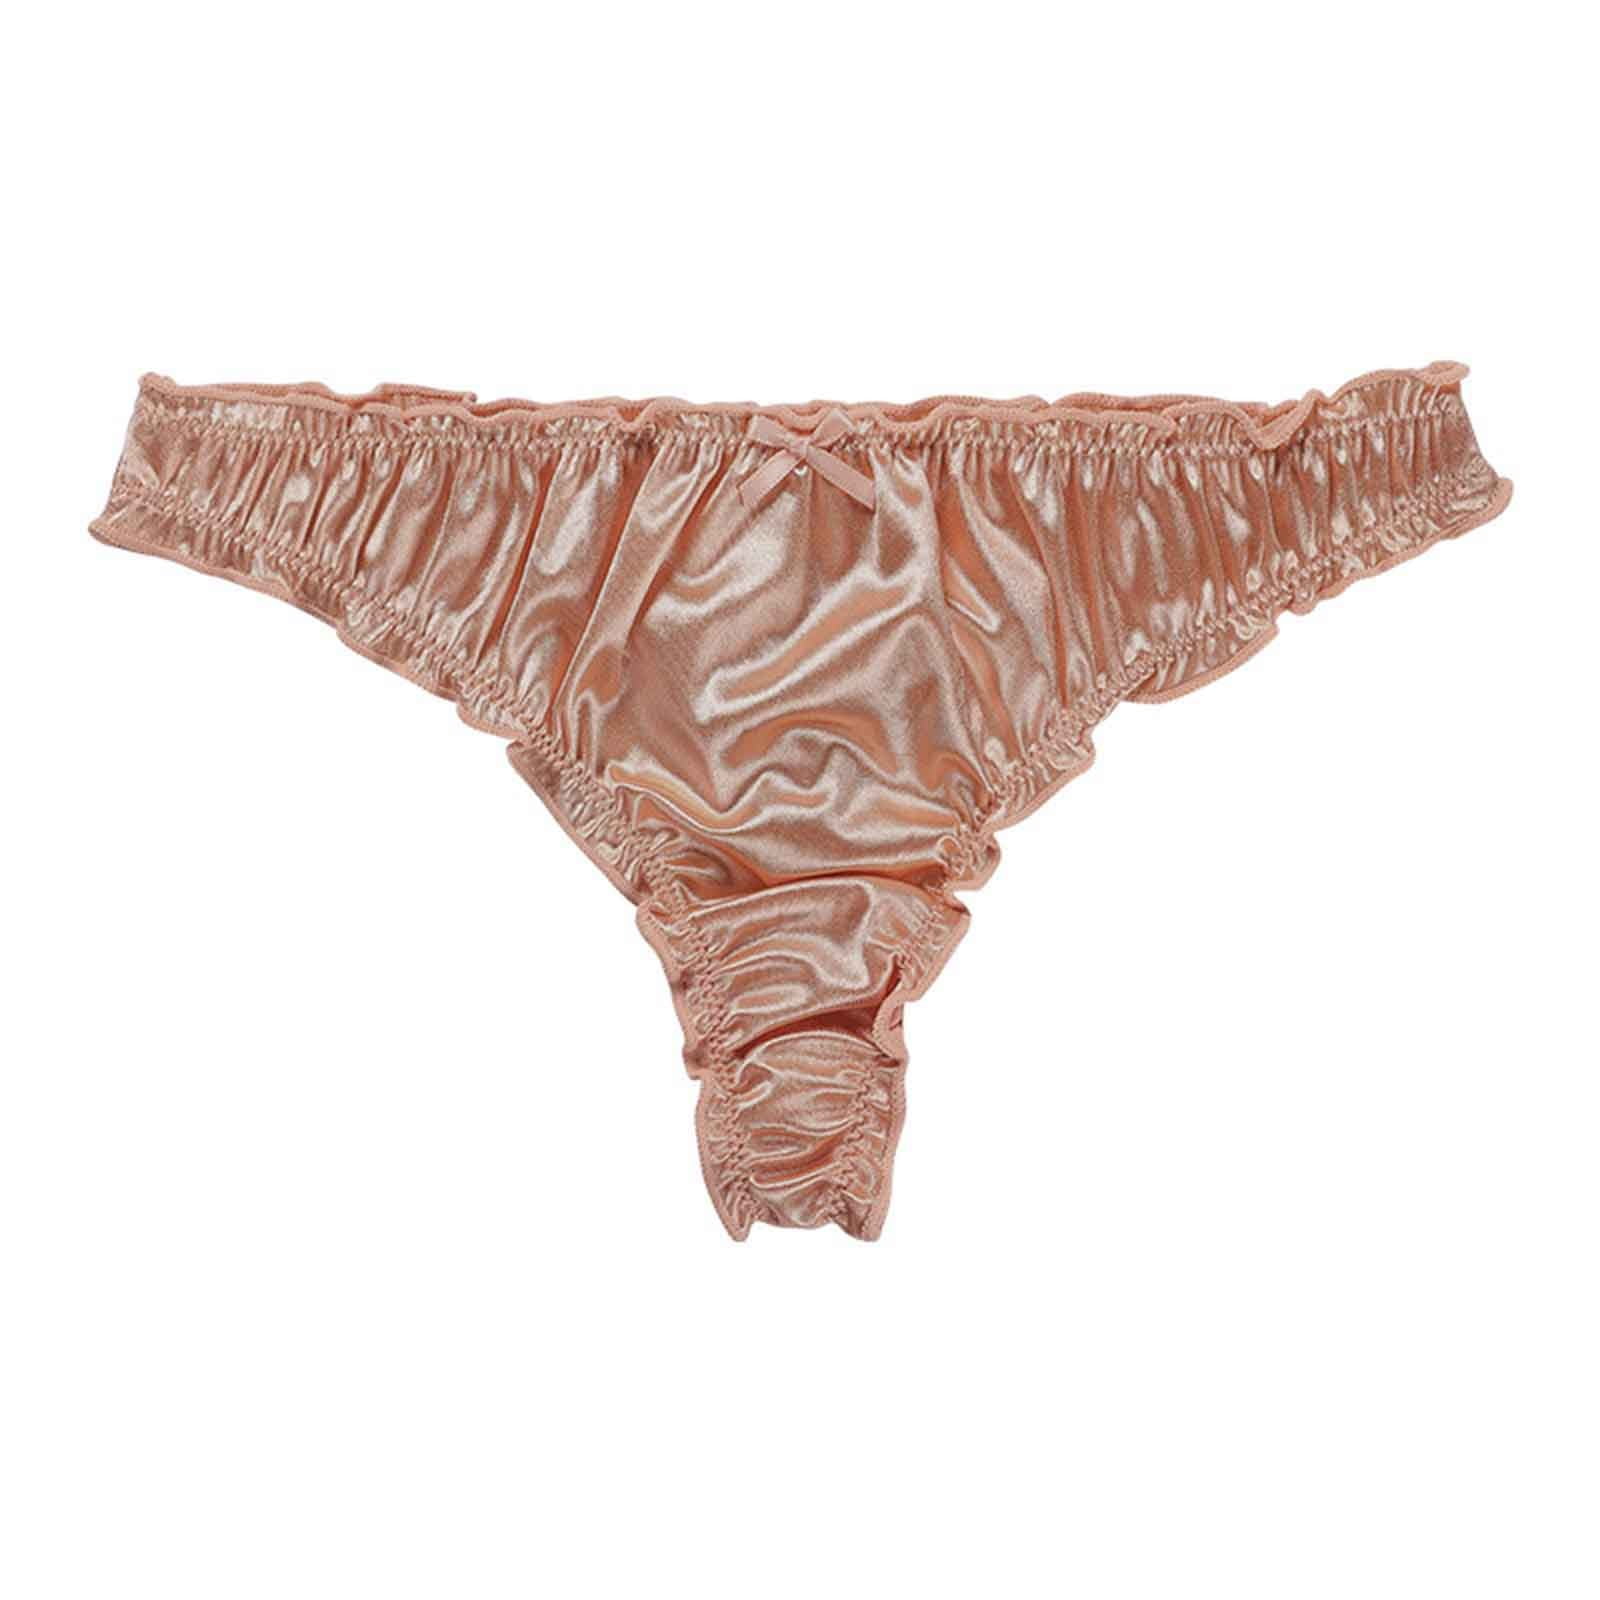 adviicd Cotton Panties Women's Underwear No Panty Line Promise